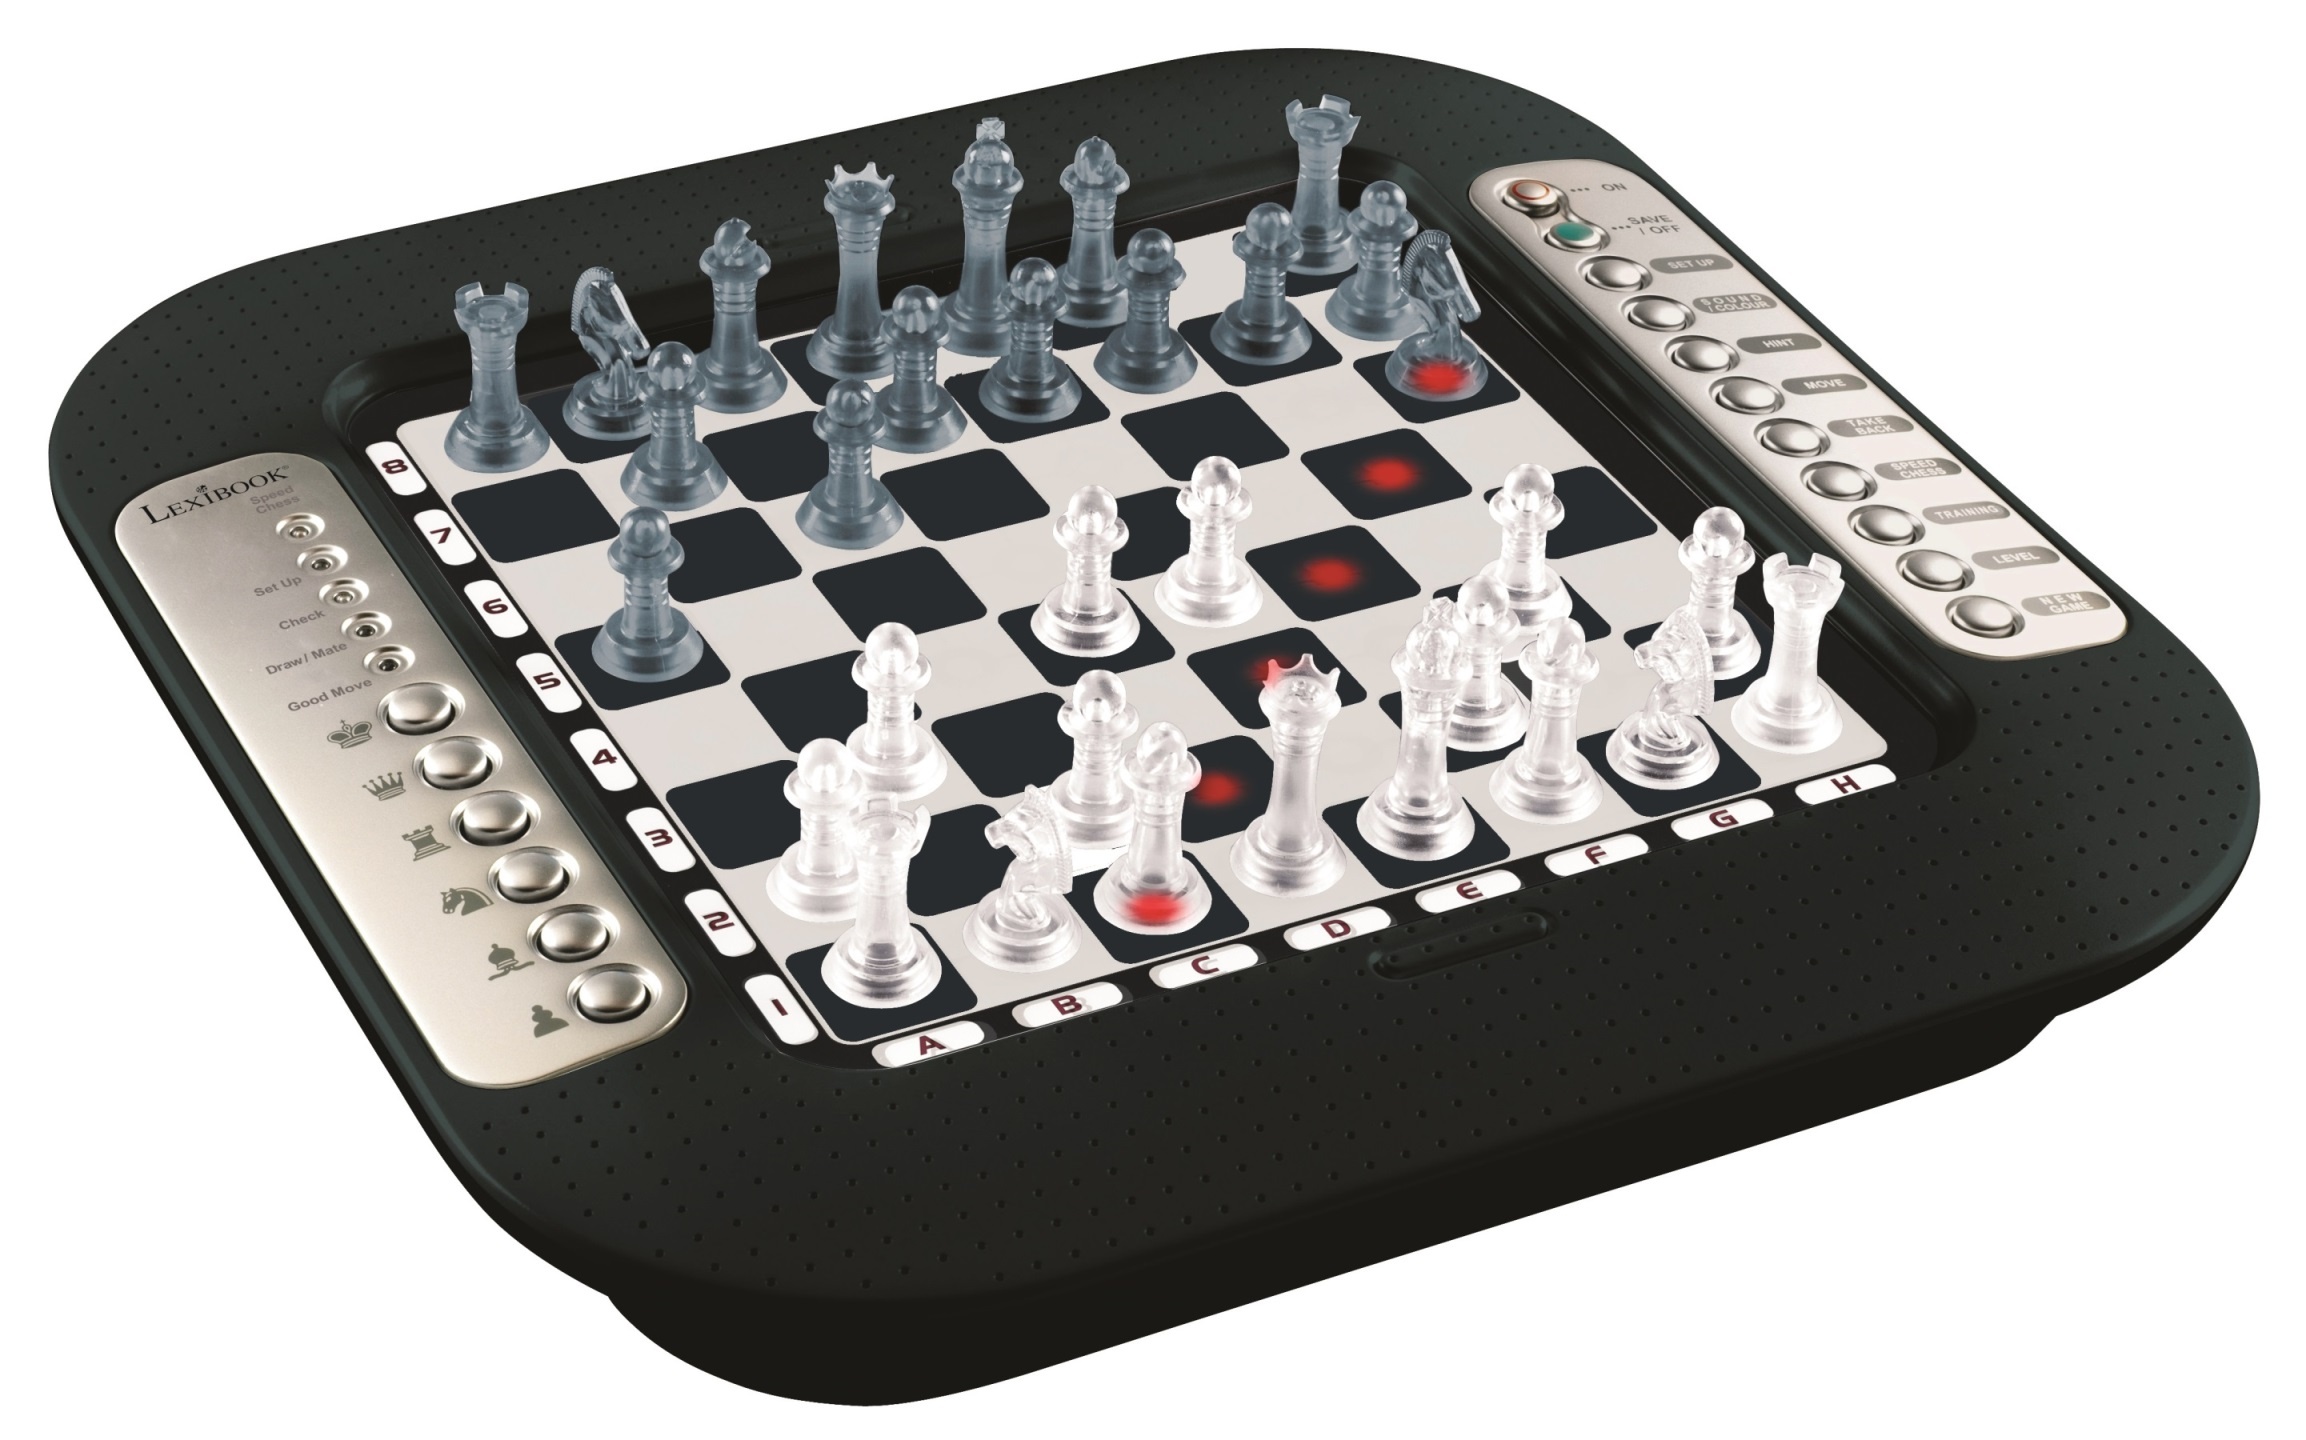 Lexibook ChessMan FX Electronic Chess Game